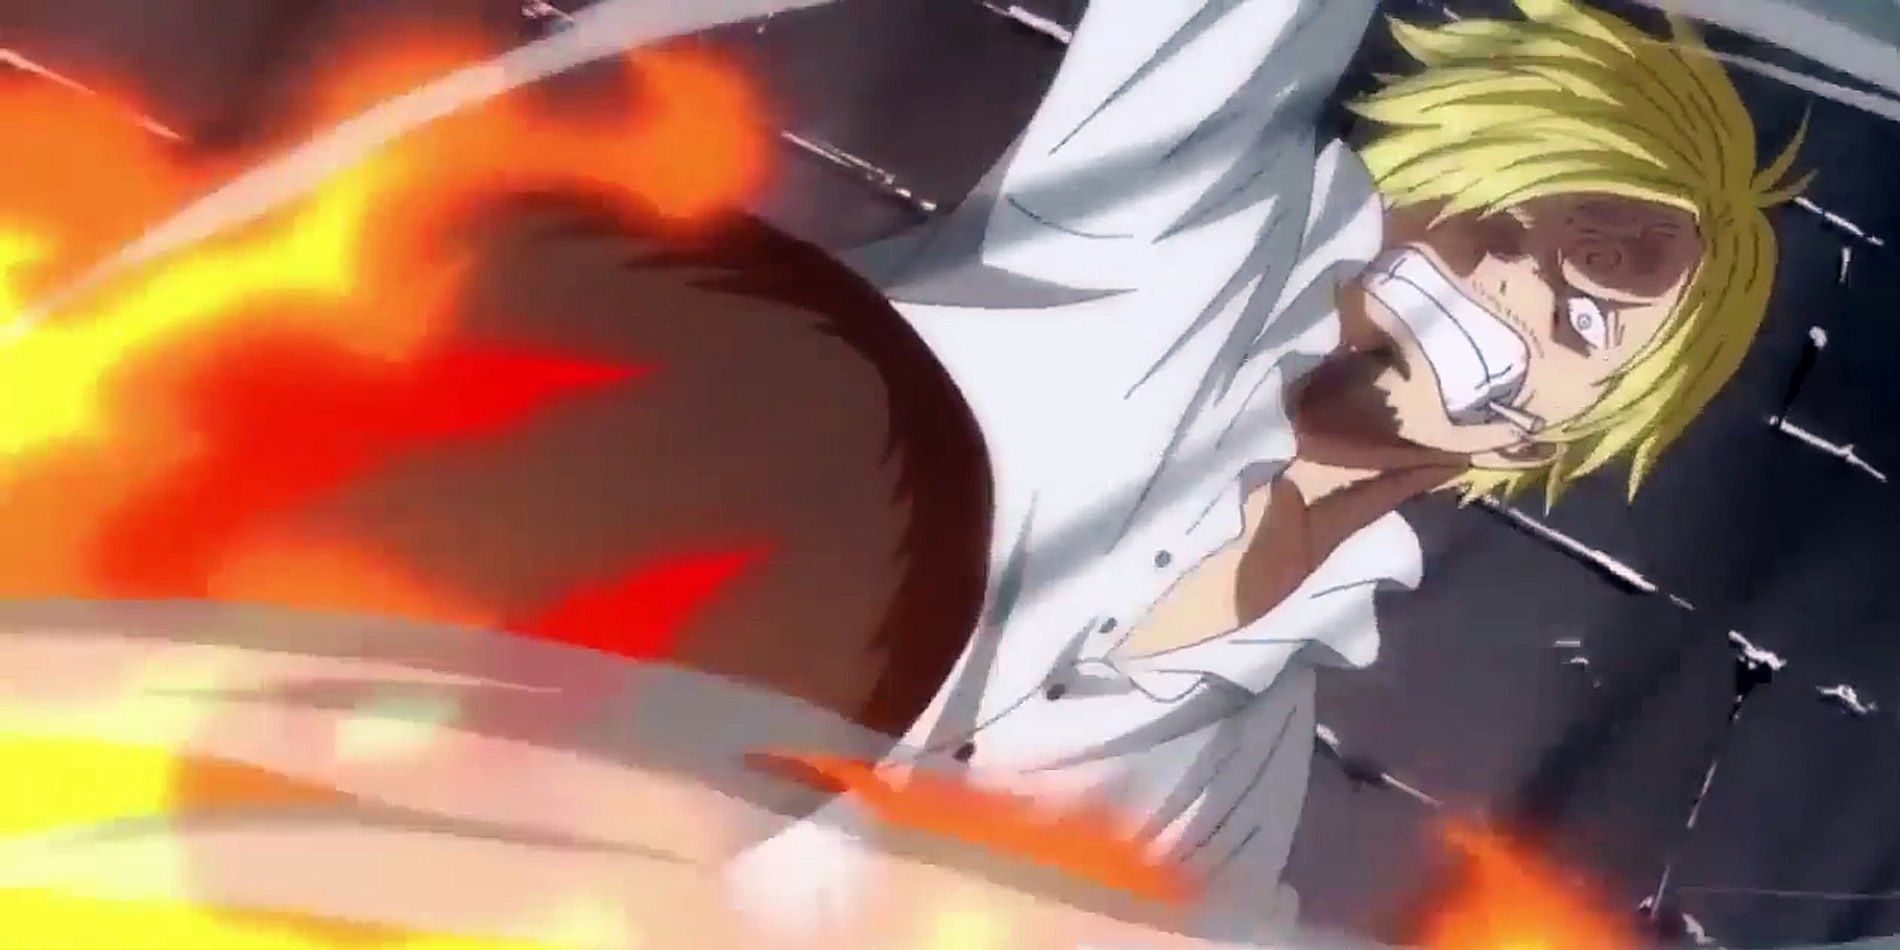 sanji kicking flame